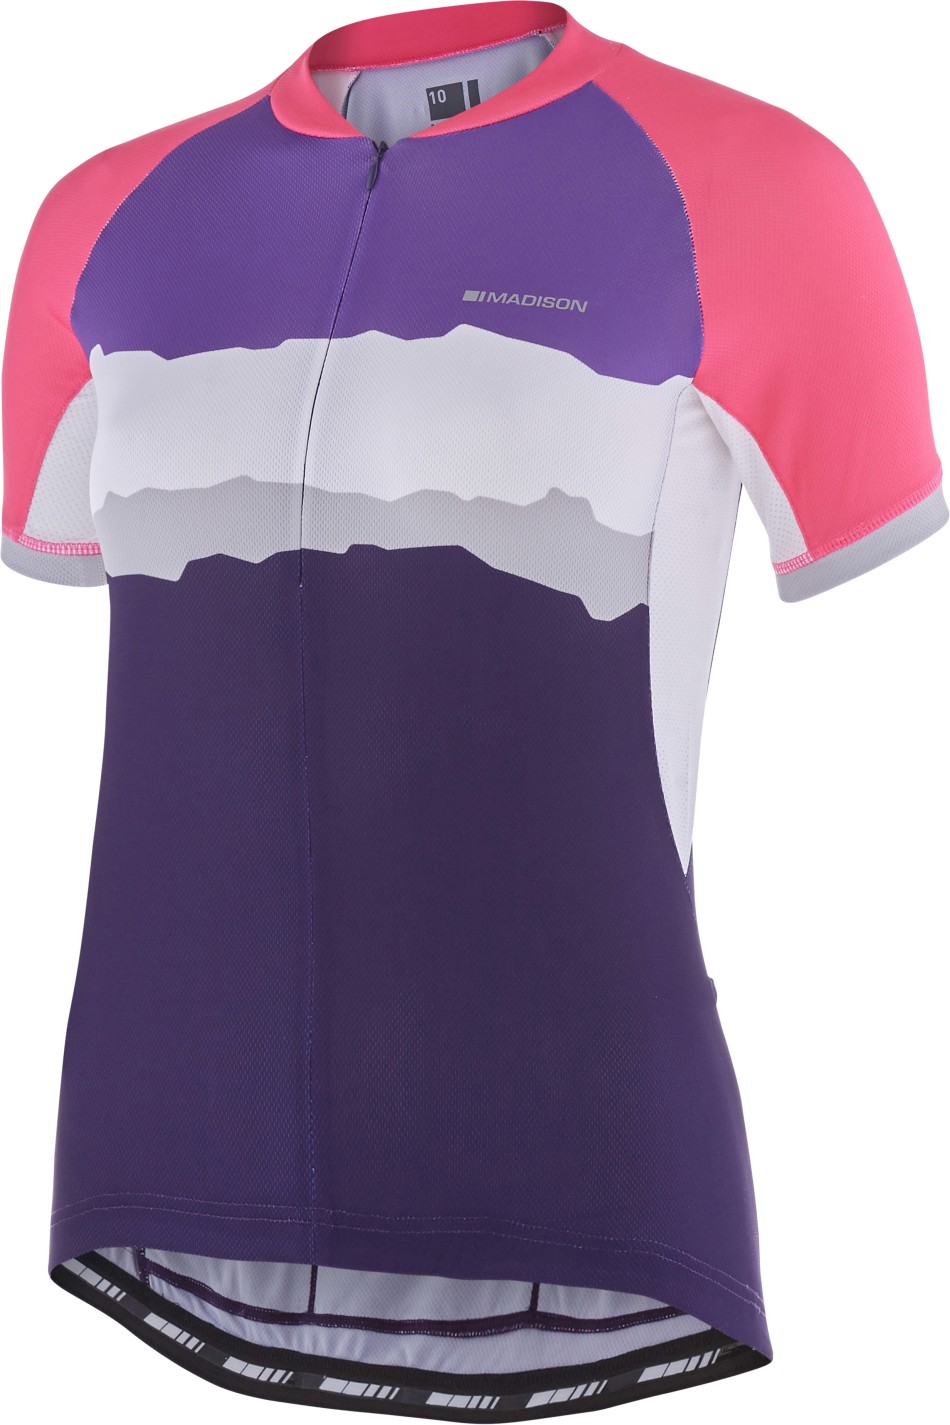 Madison Women's Keirin Short Sleeve Jersey Pink/Purple